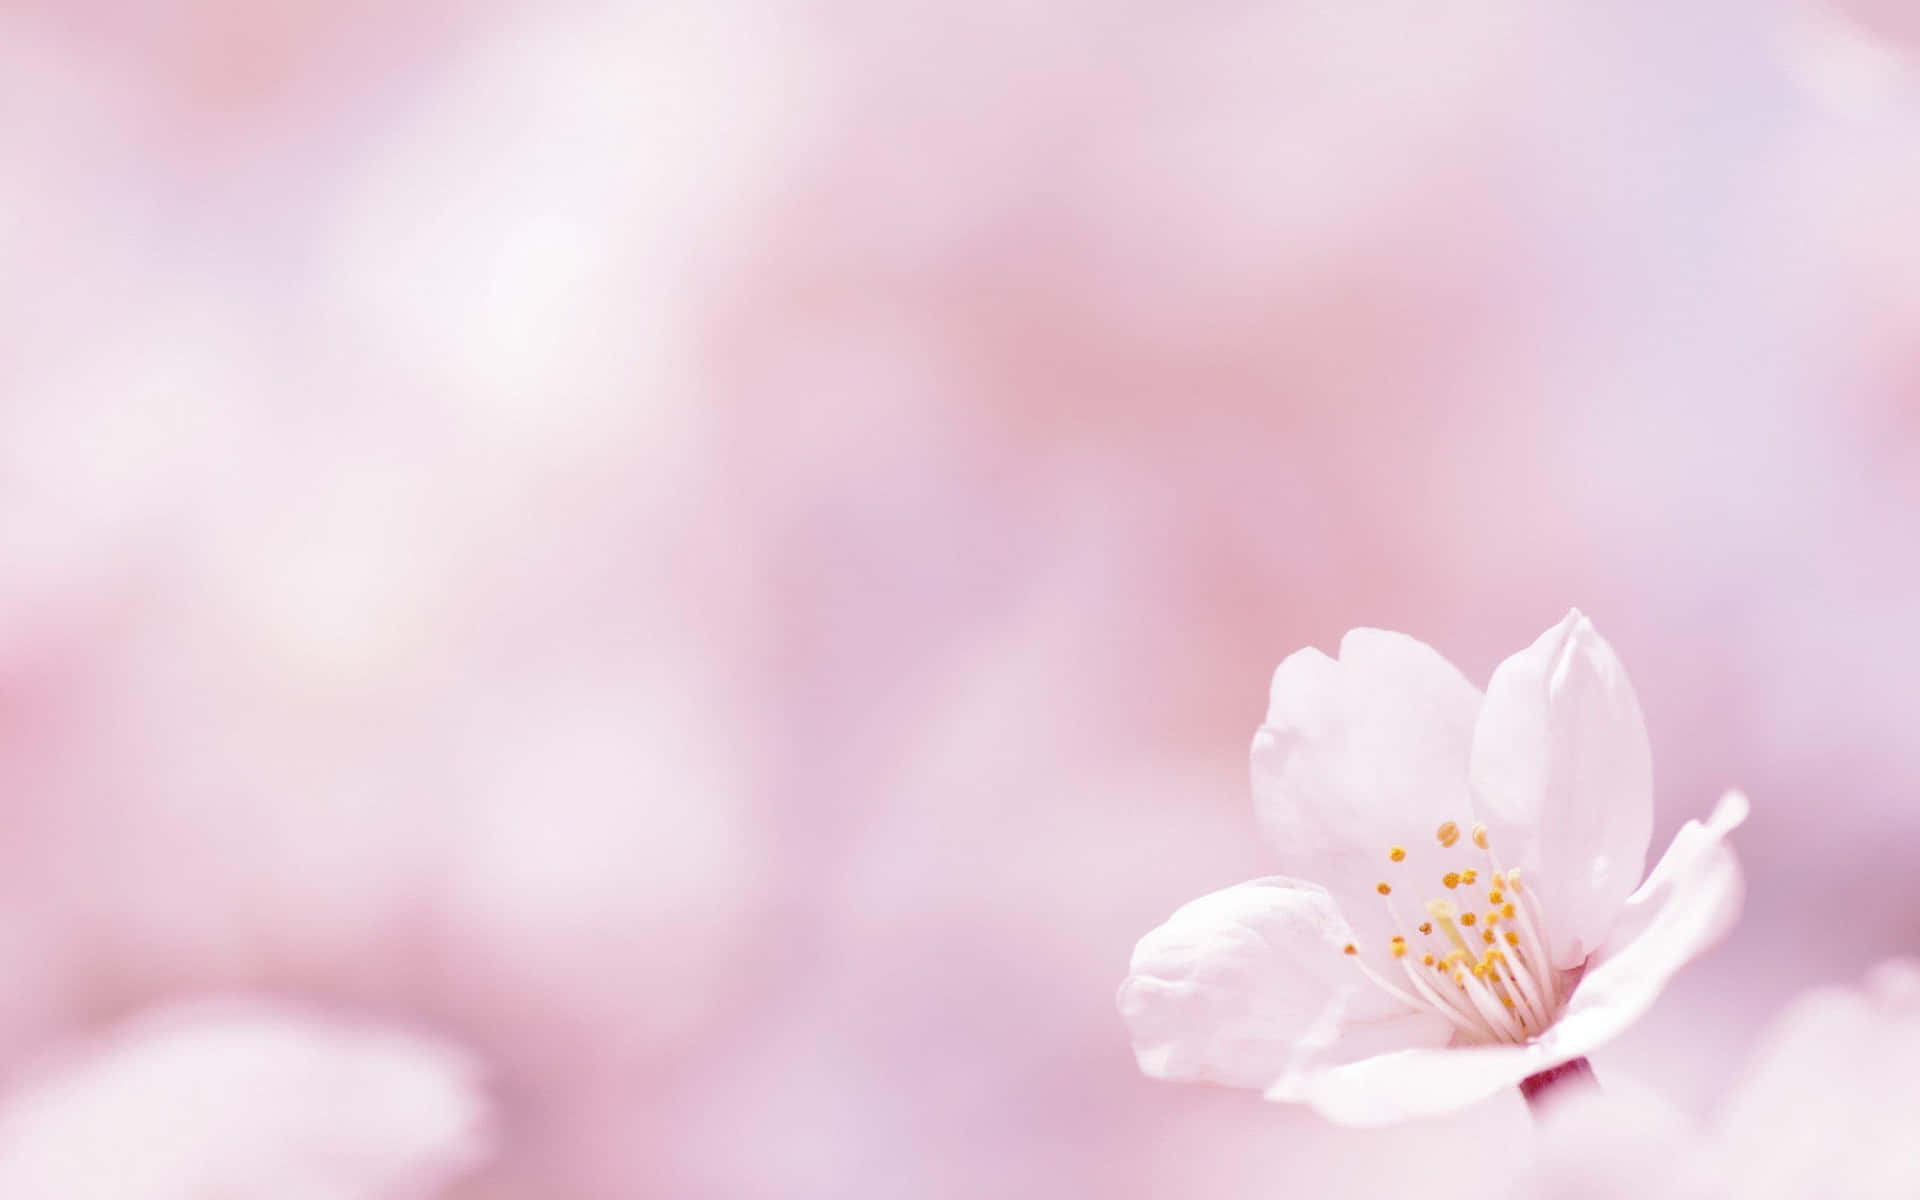 Single Cherry Blossom Spring Flower Background